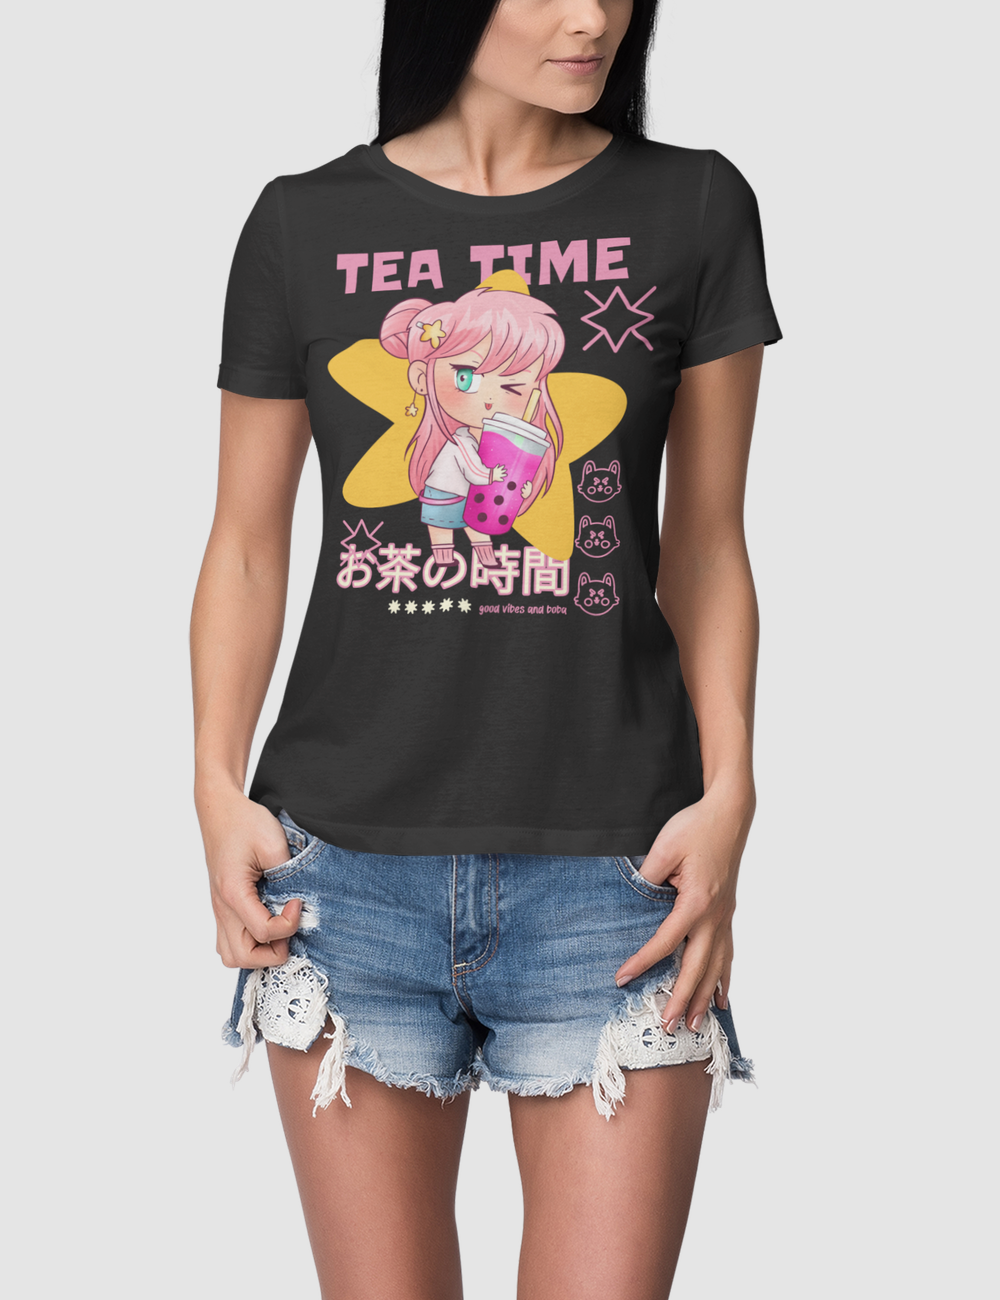 Boba Tea Time | Women's Fitted T-Shirt OniTakai